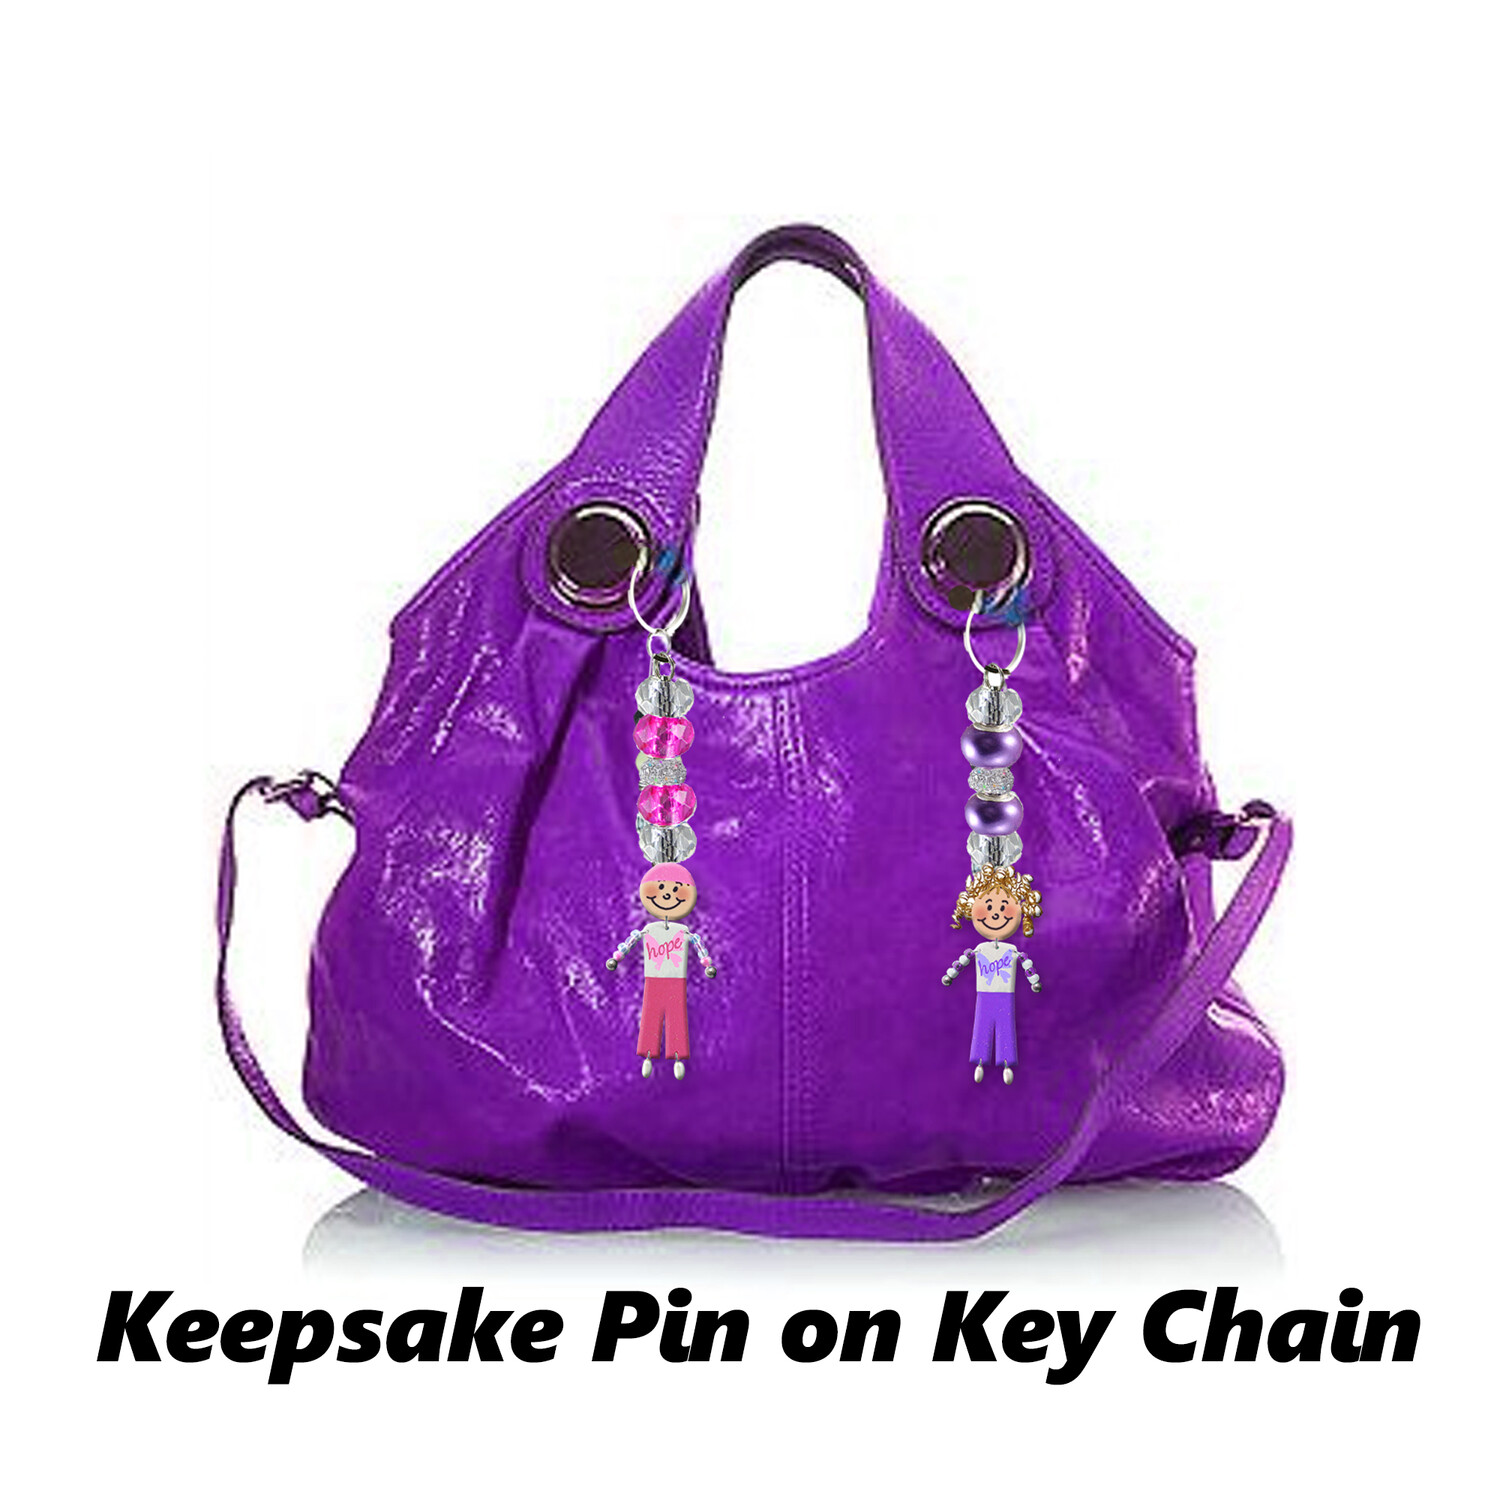 Cancer Awareness - Keepsake Pin w / Key Chain Attachment